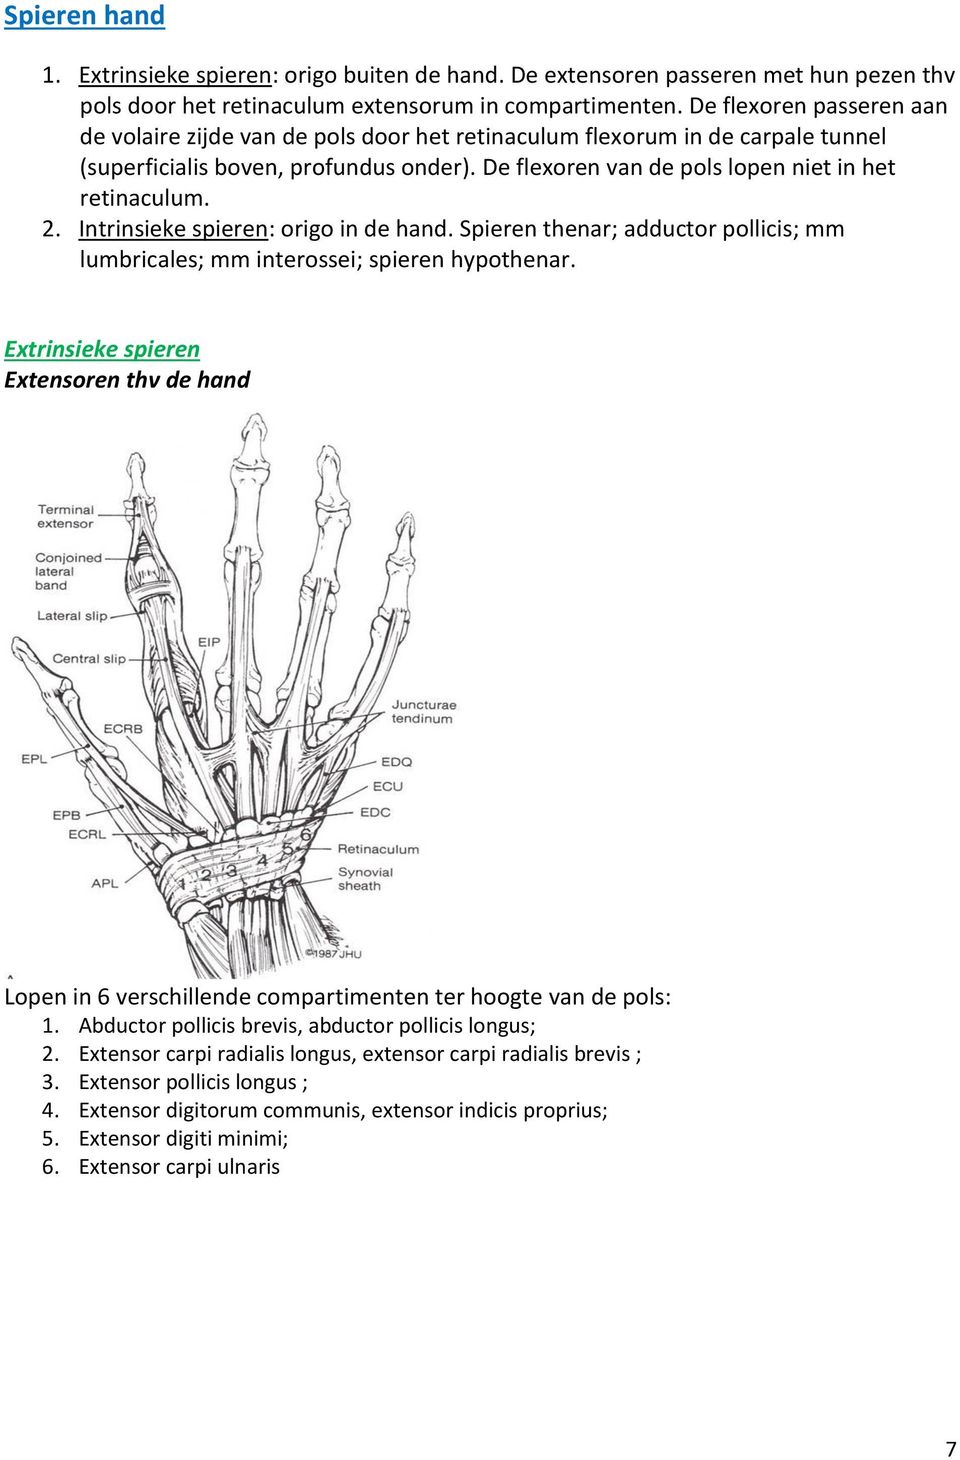 2. Intrinsieke spieren: origo in de hand. Spieren thenar; adductor pollicis; mm lumbricales; mm interossei; spieren hypothenar.